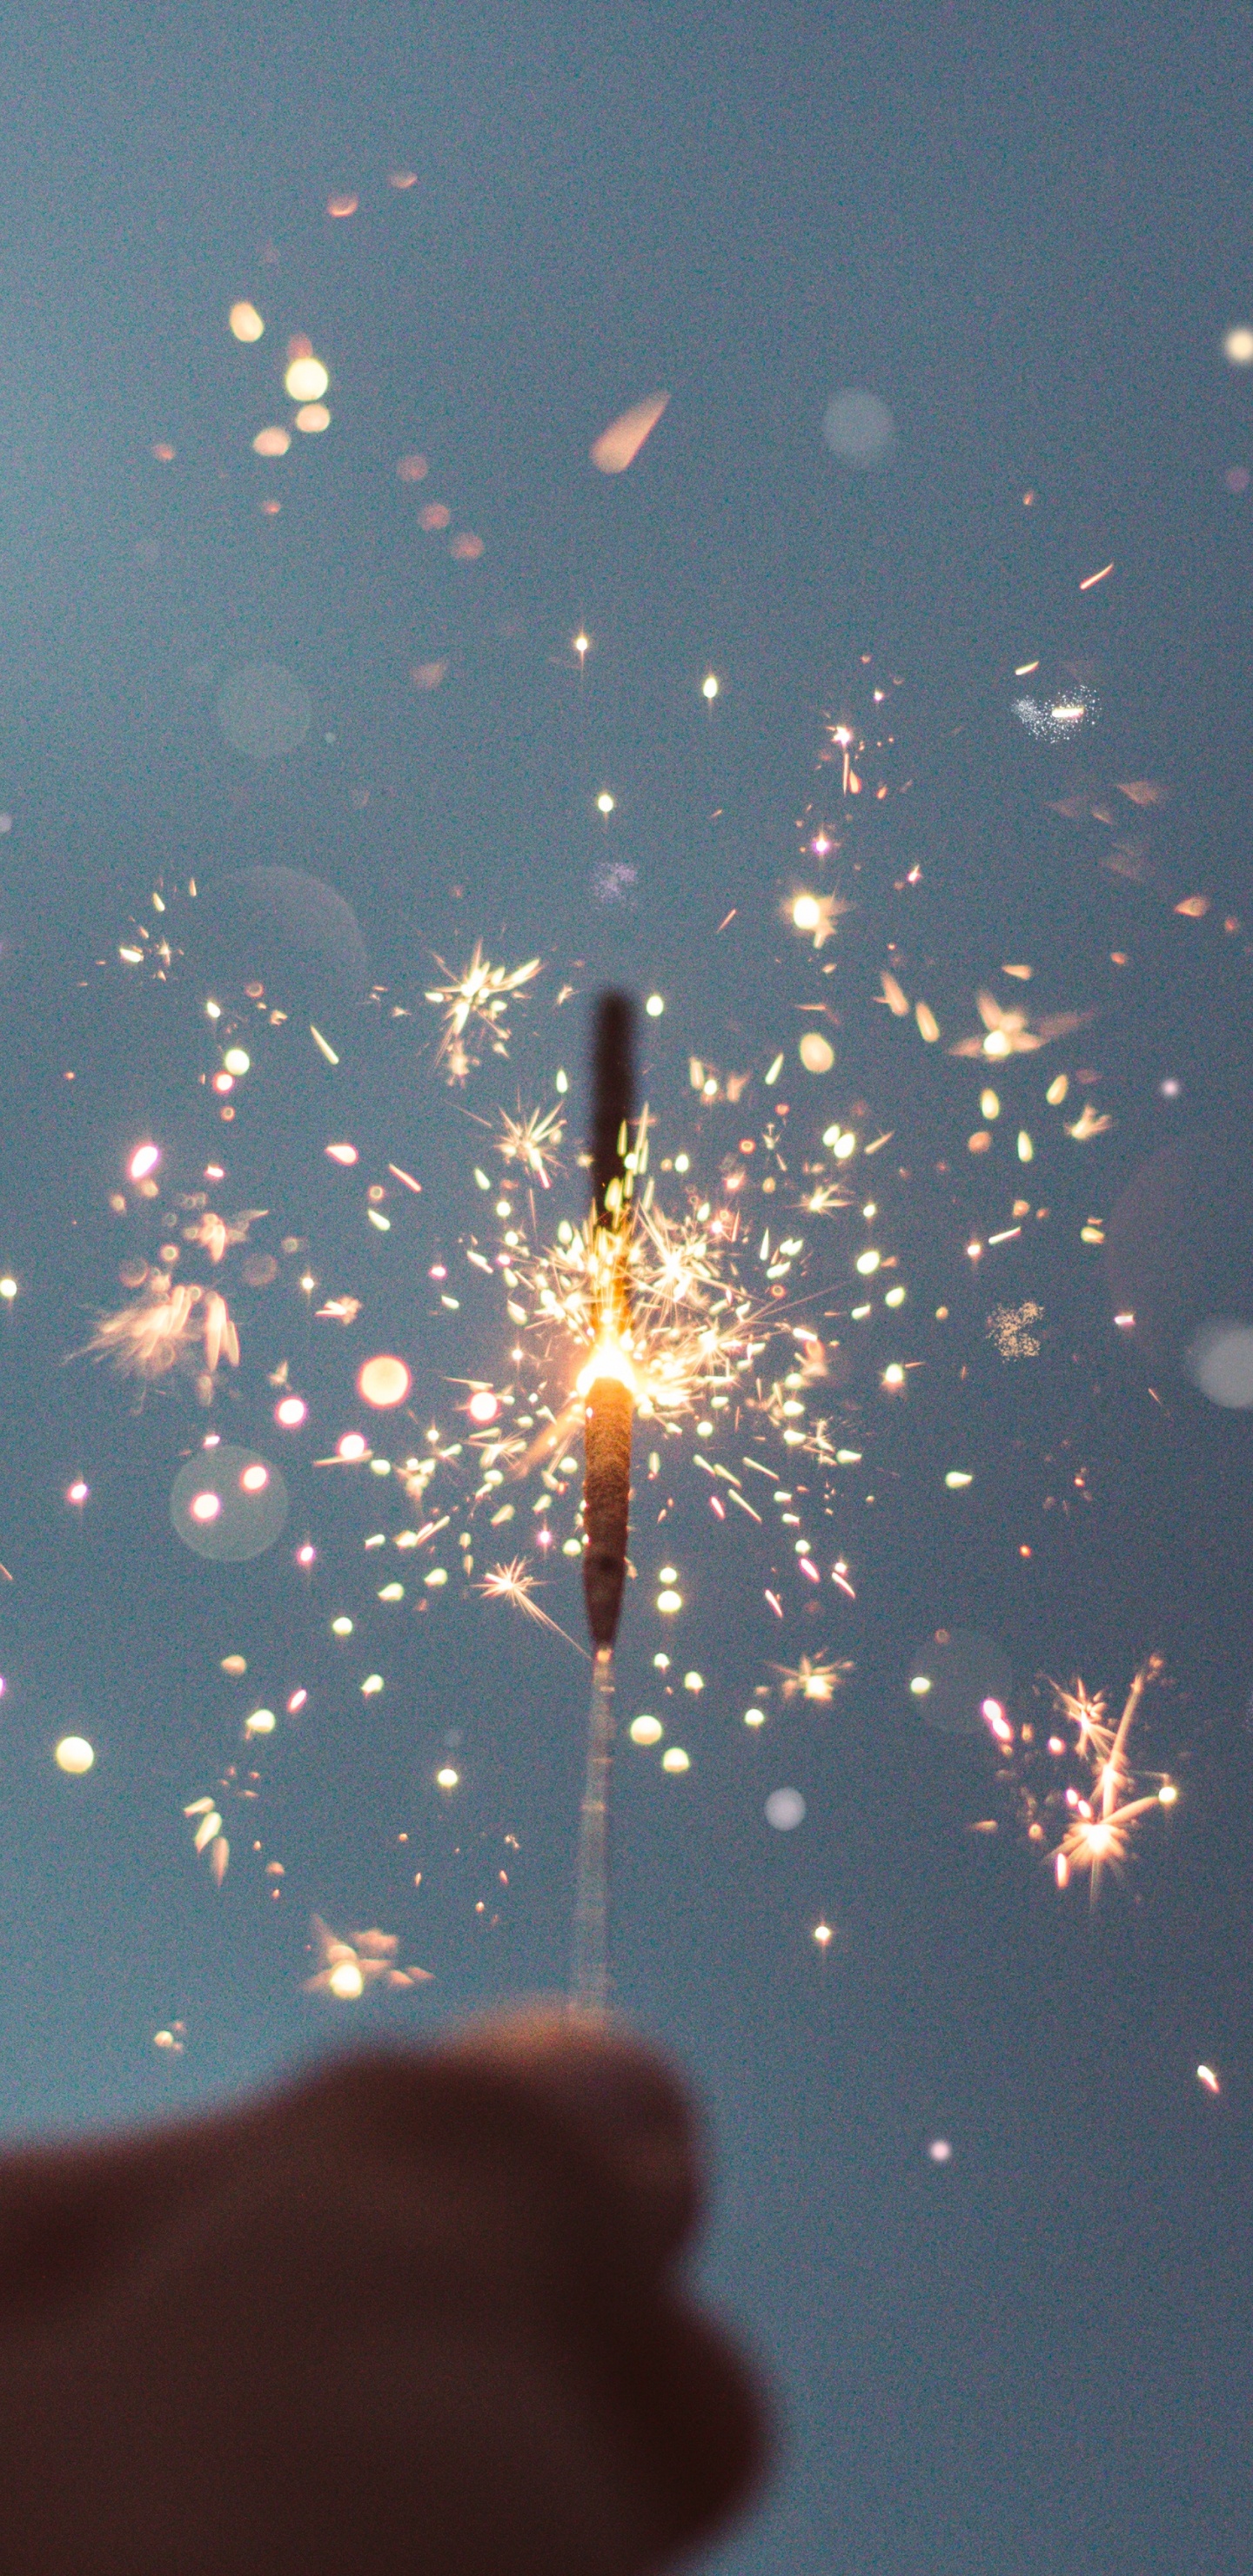 New Year, Water, Sparkler, Fireworks, Hand. Wallpaper in 1440x2960 Resolution